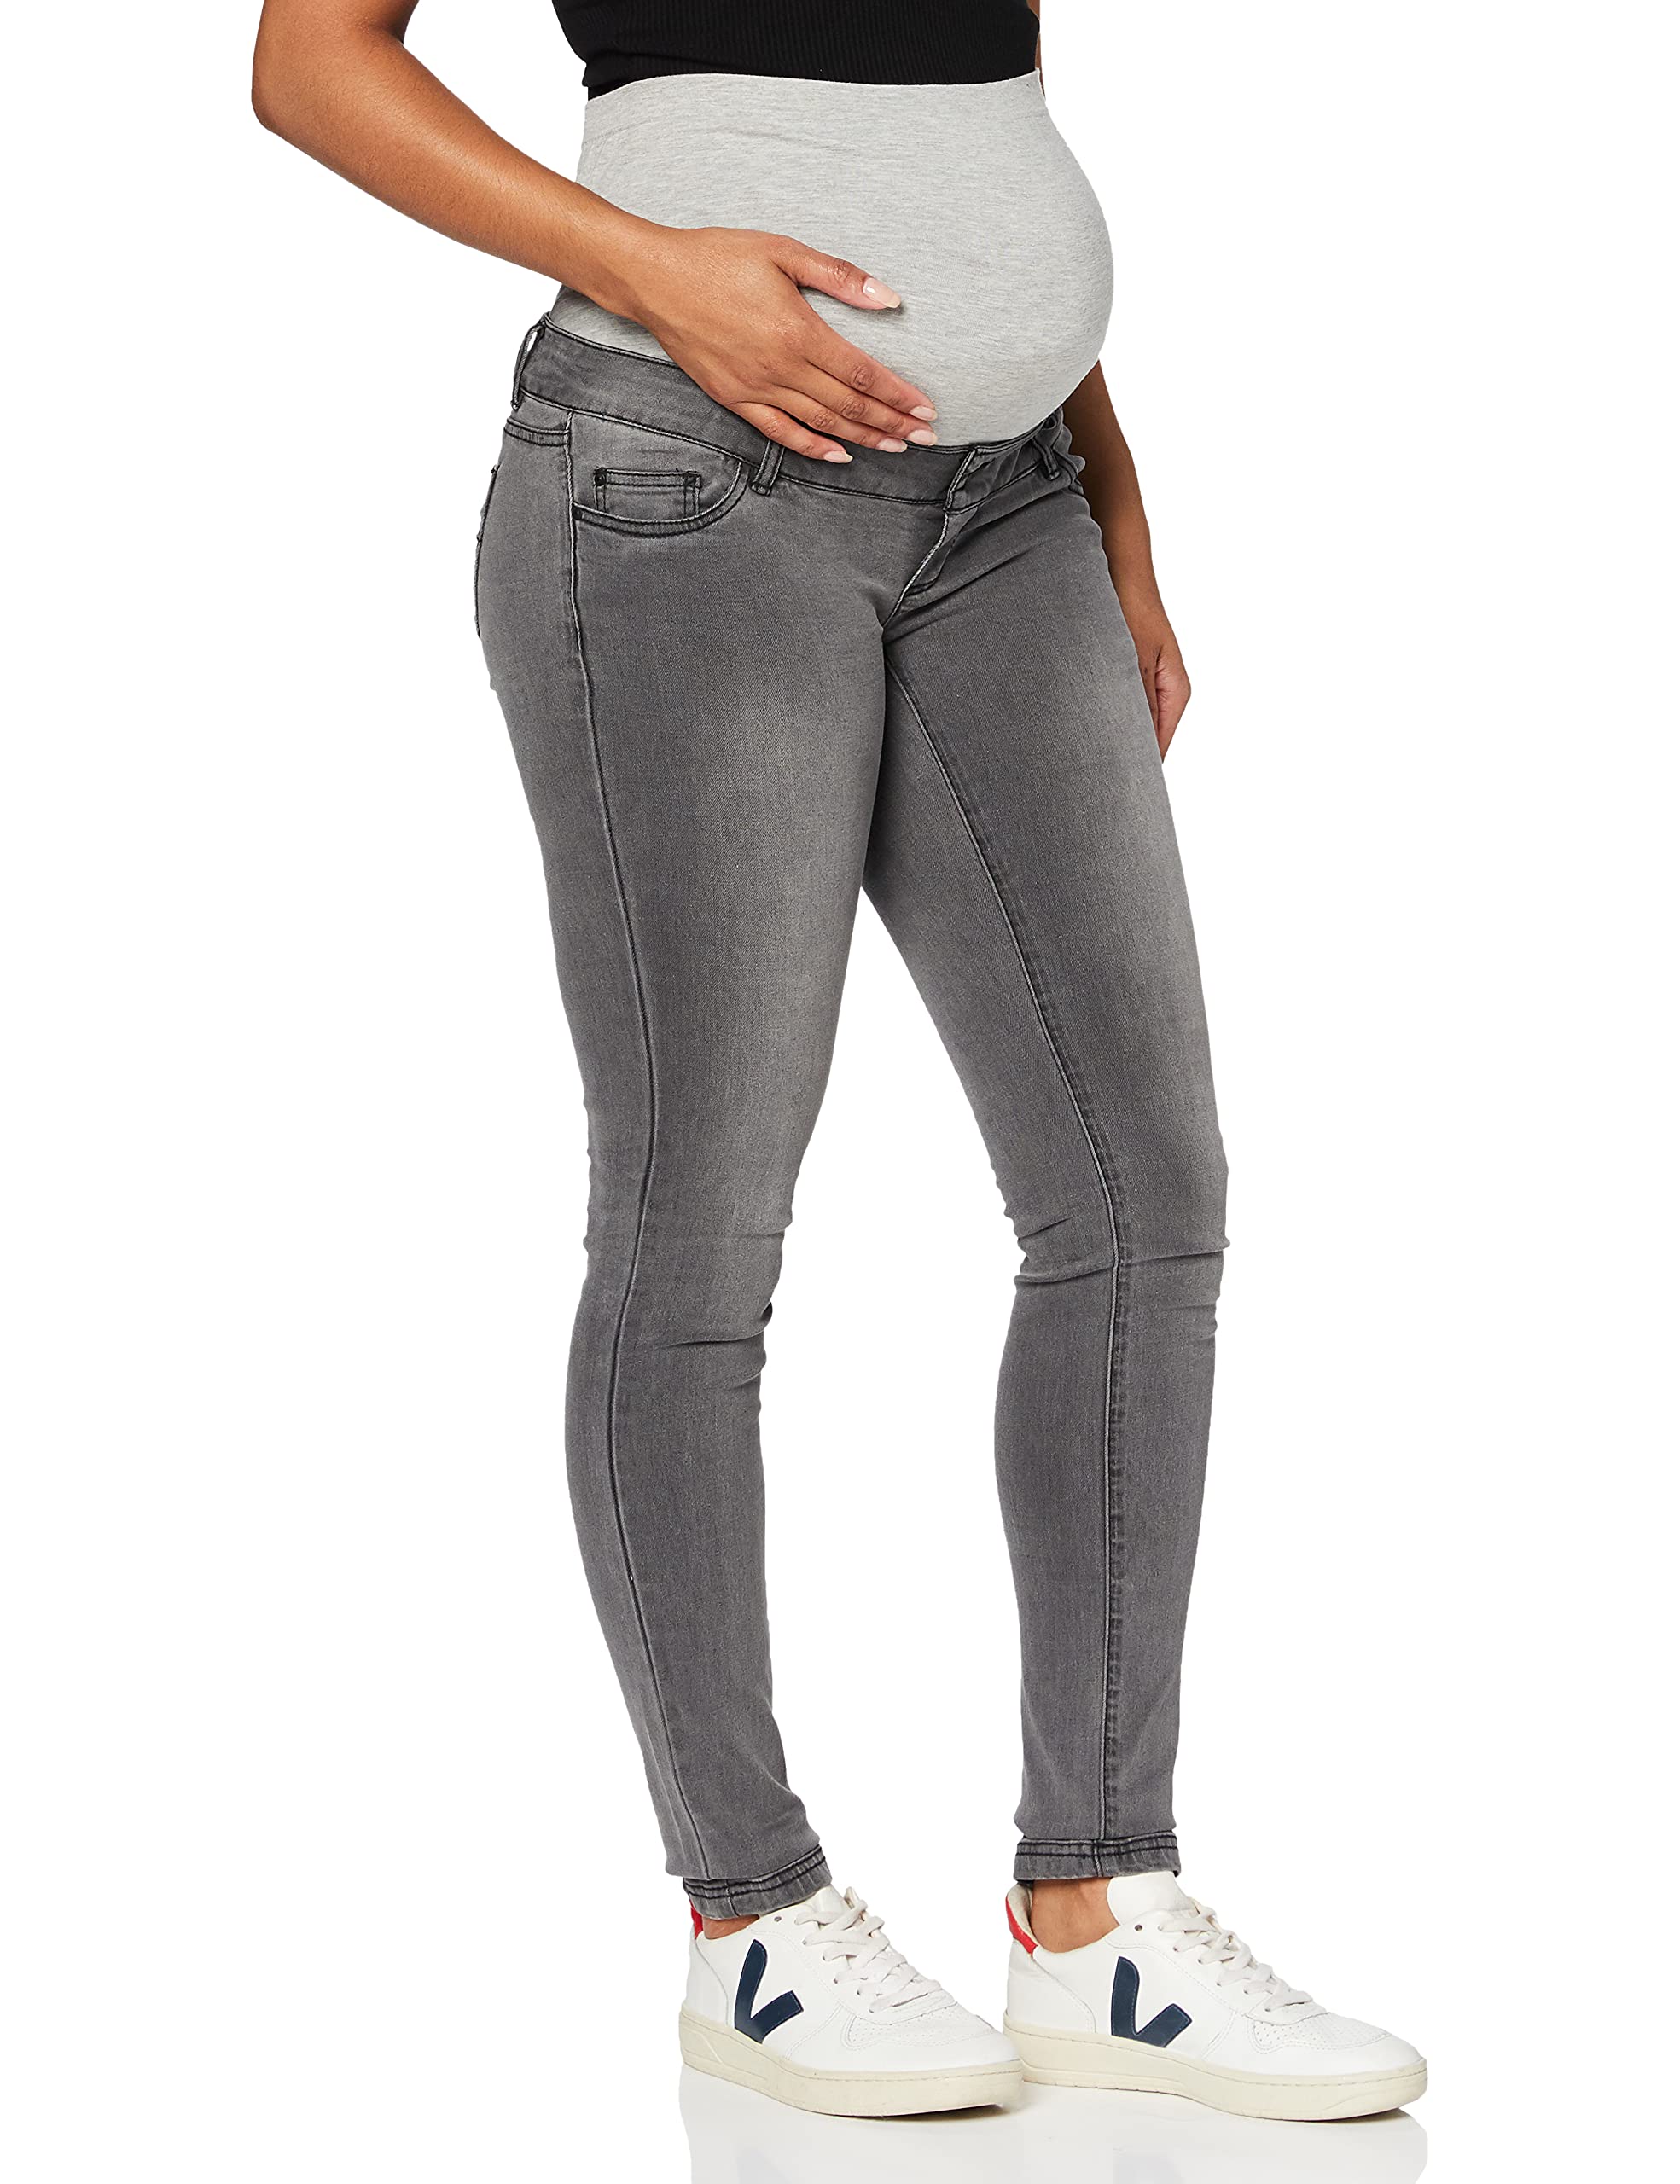 MAMALICIOUS Damen Mllola Slim Grey Jeans A. Noos Hose, Grey Denim, 31W 34L EU